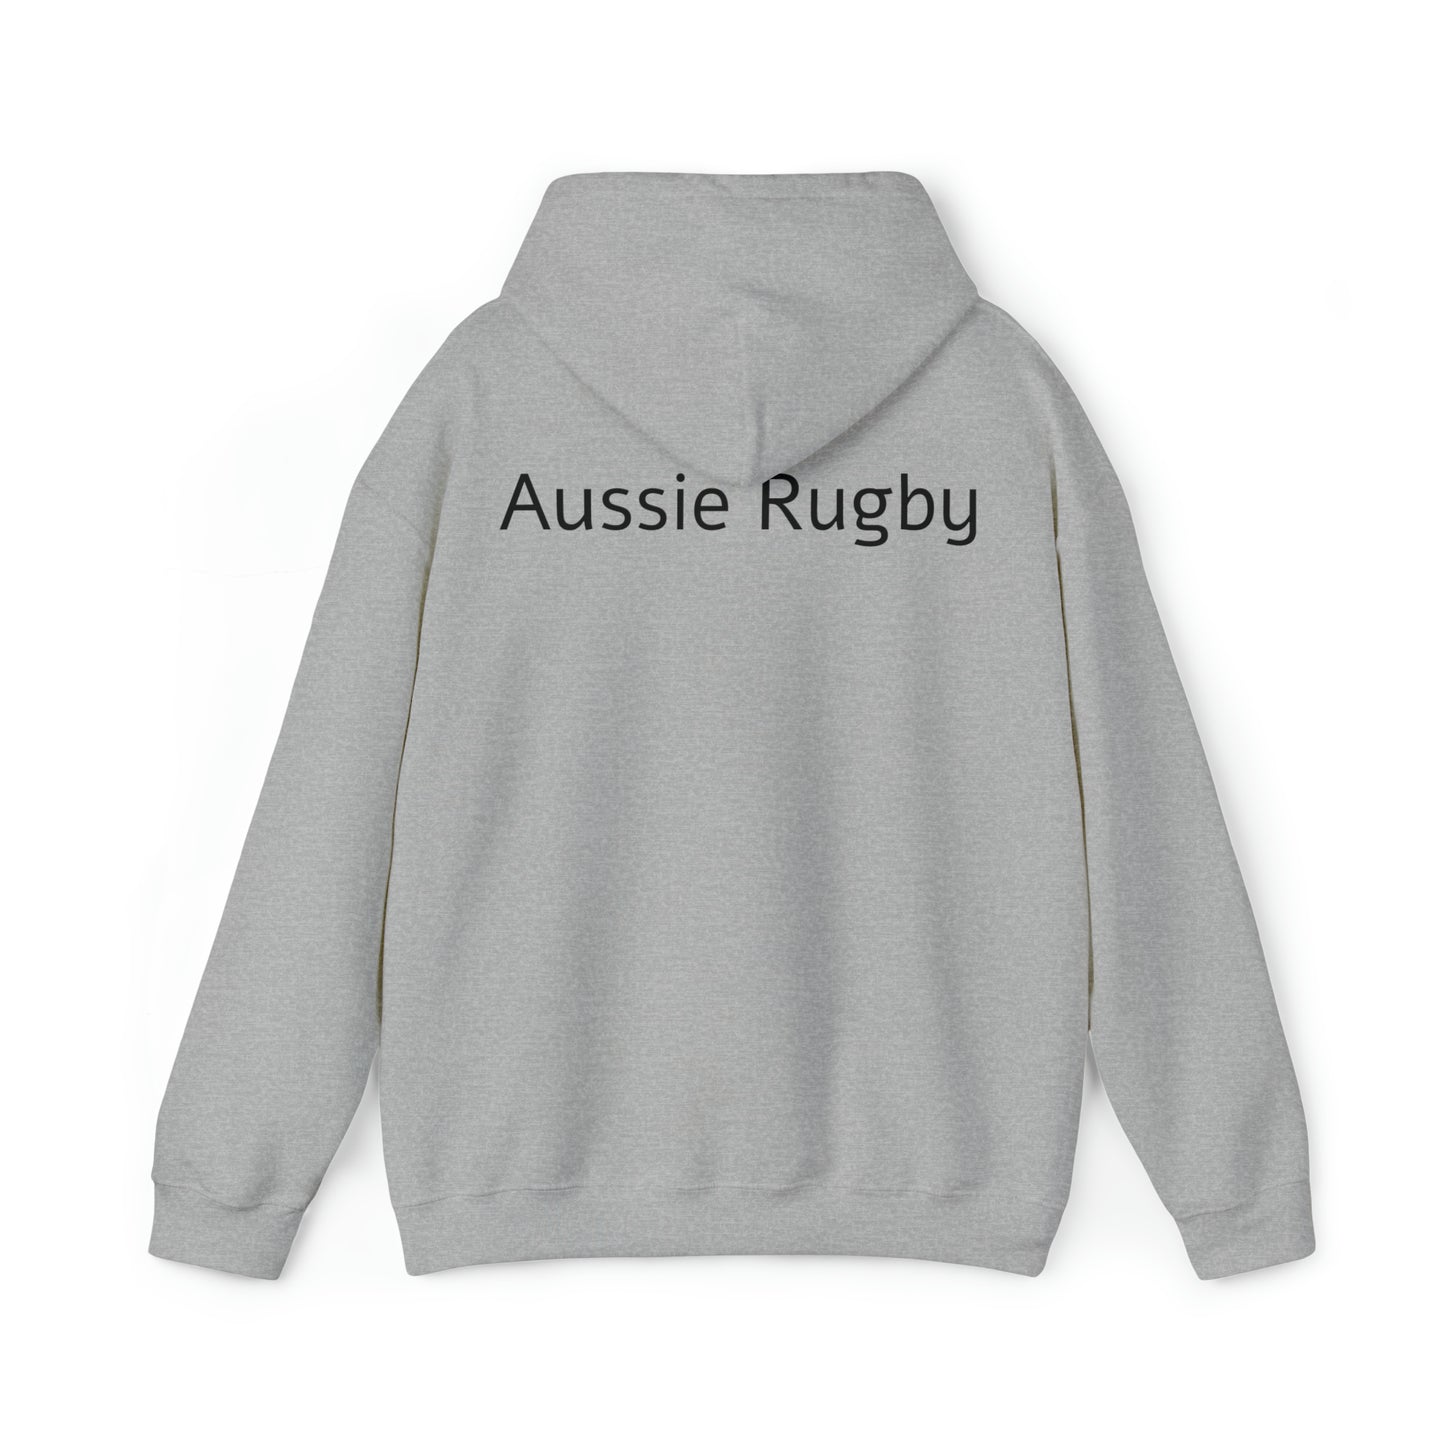 Australia celebrating with RWC - light hoodies